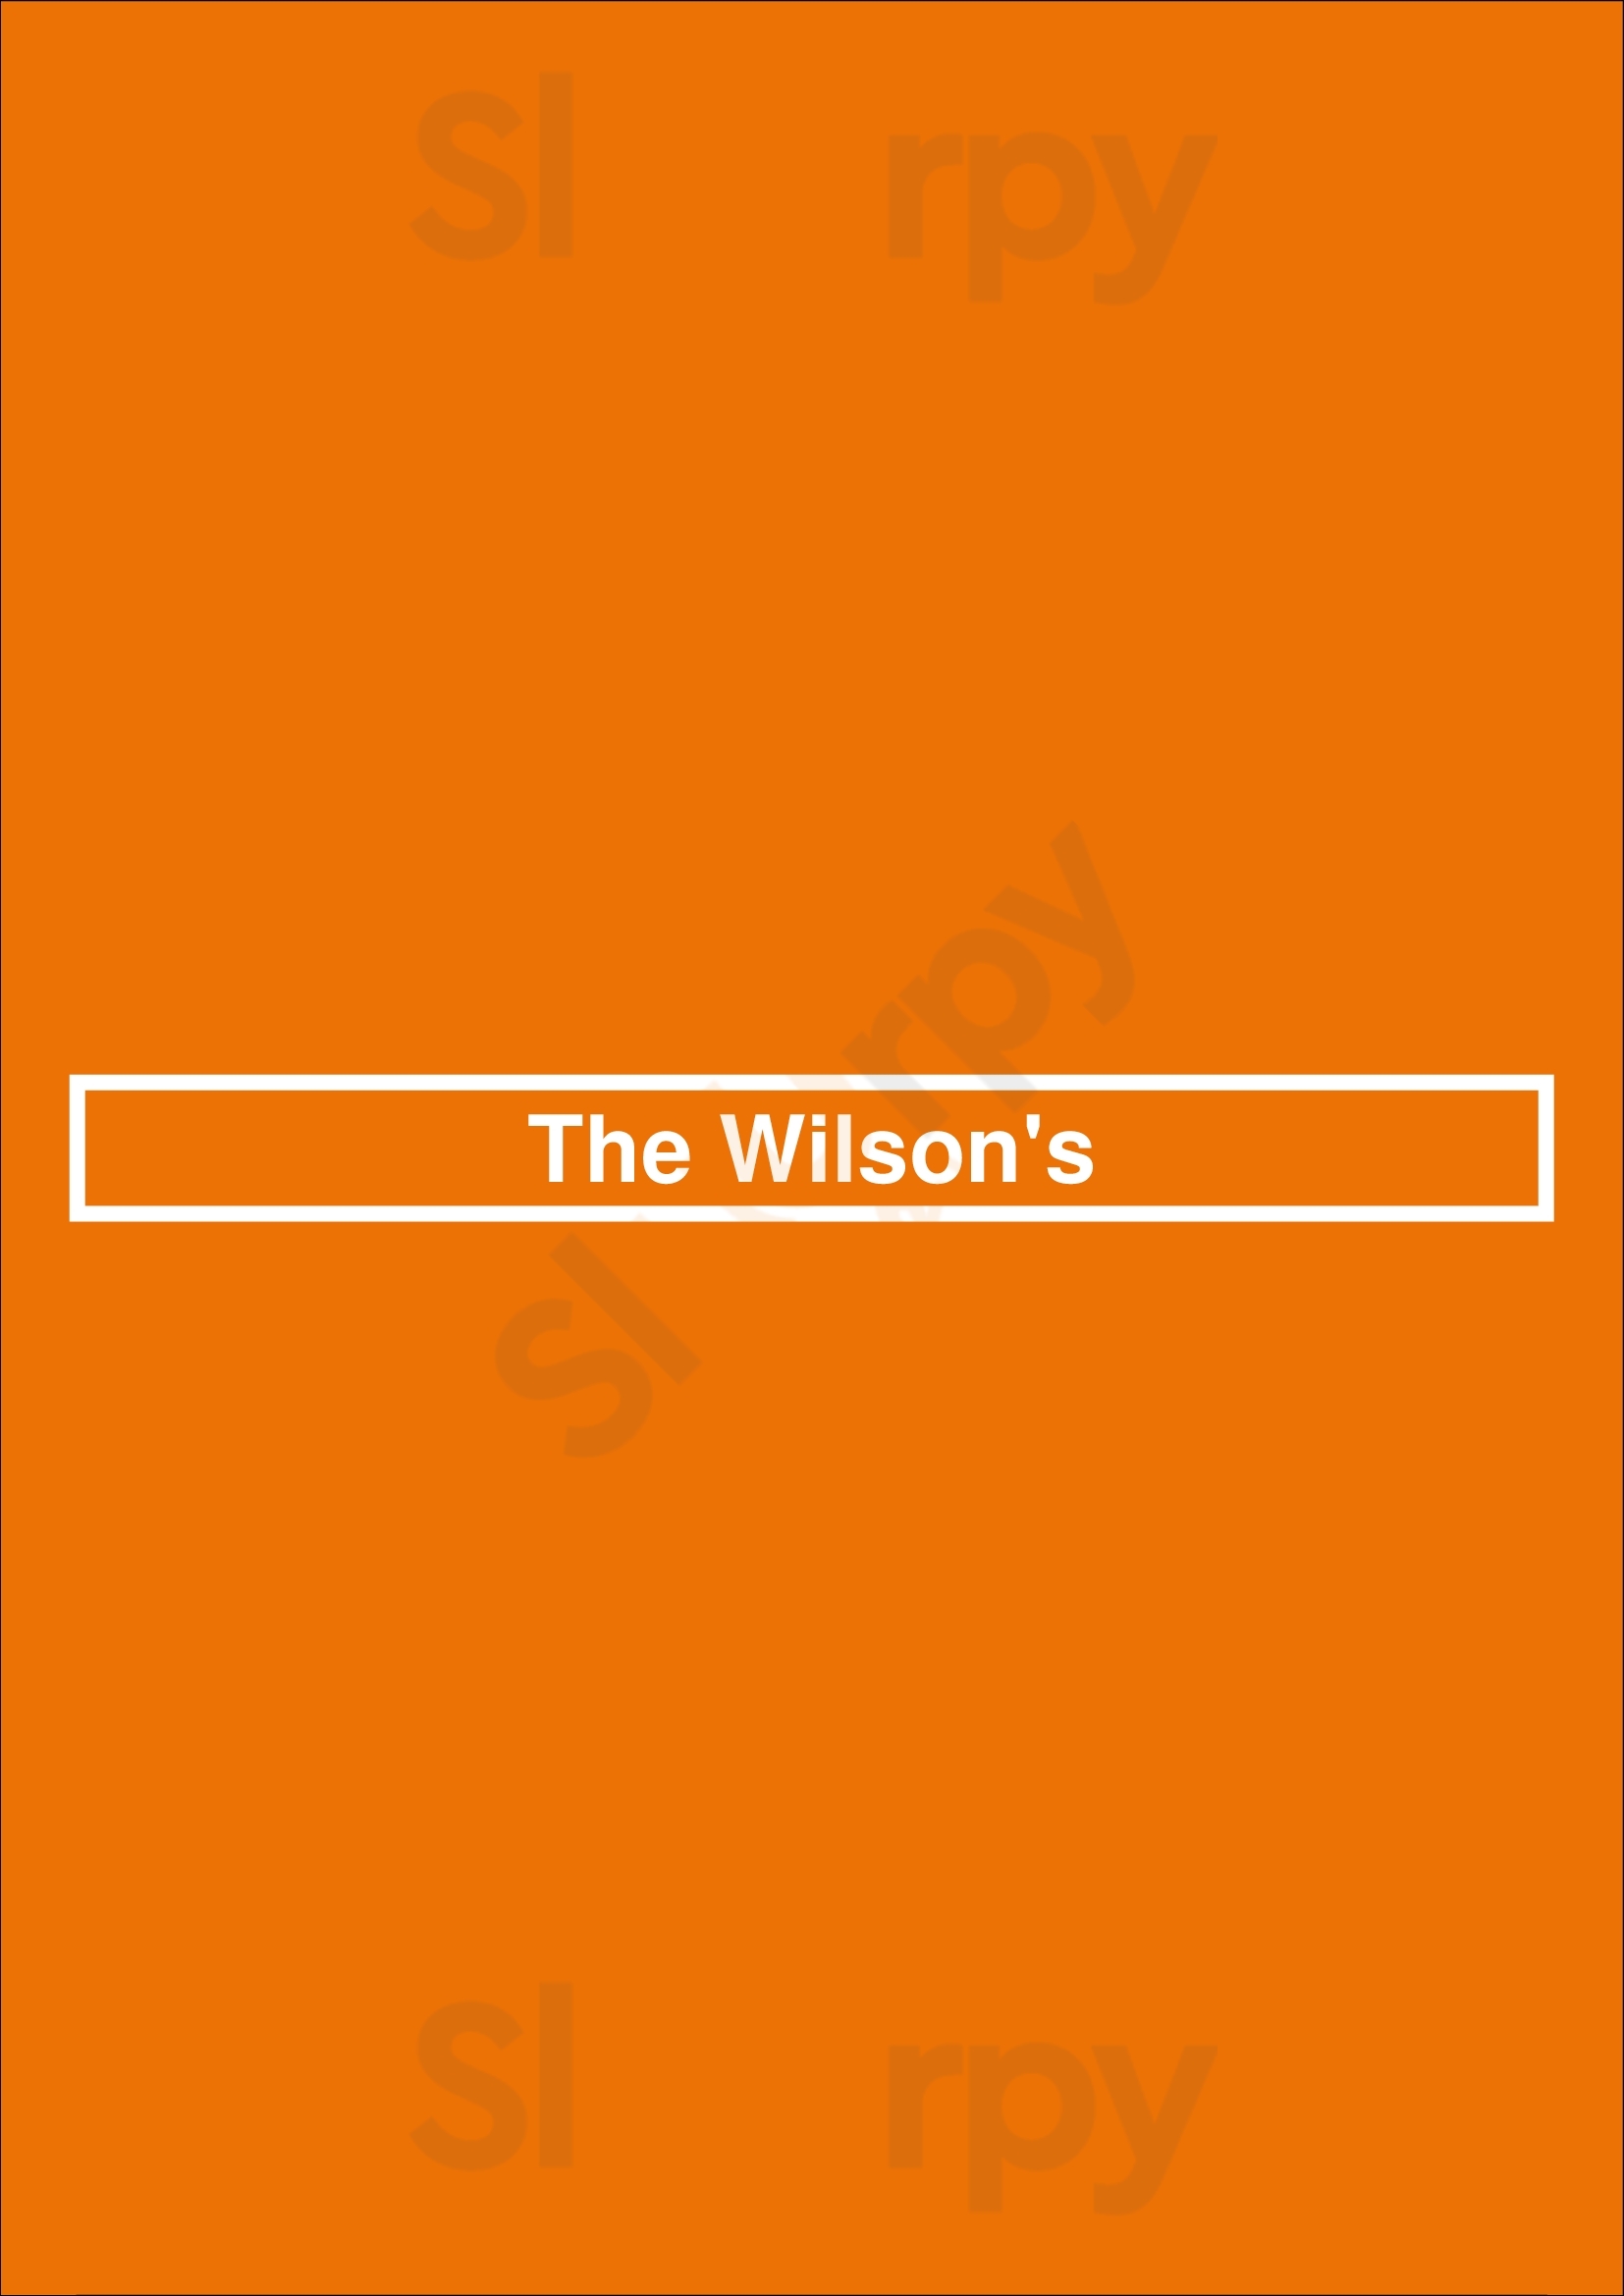 The Wilson's Berlin Menu - 1